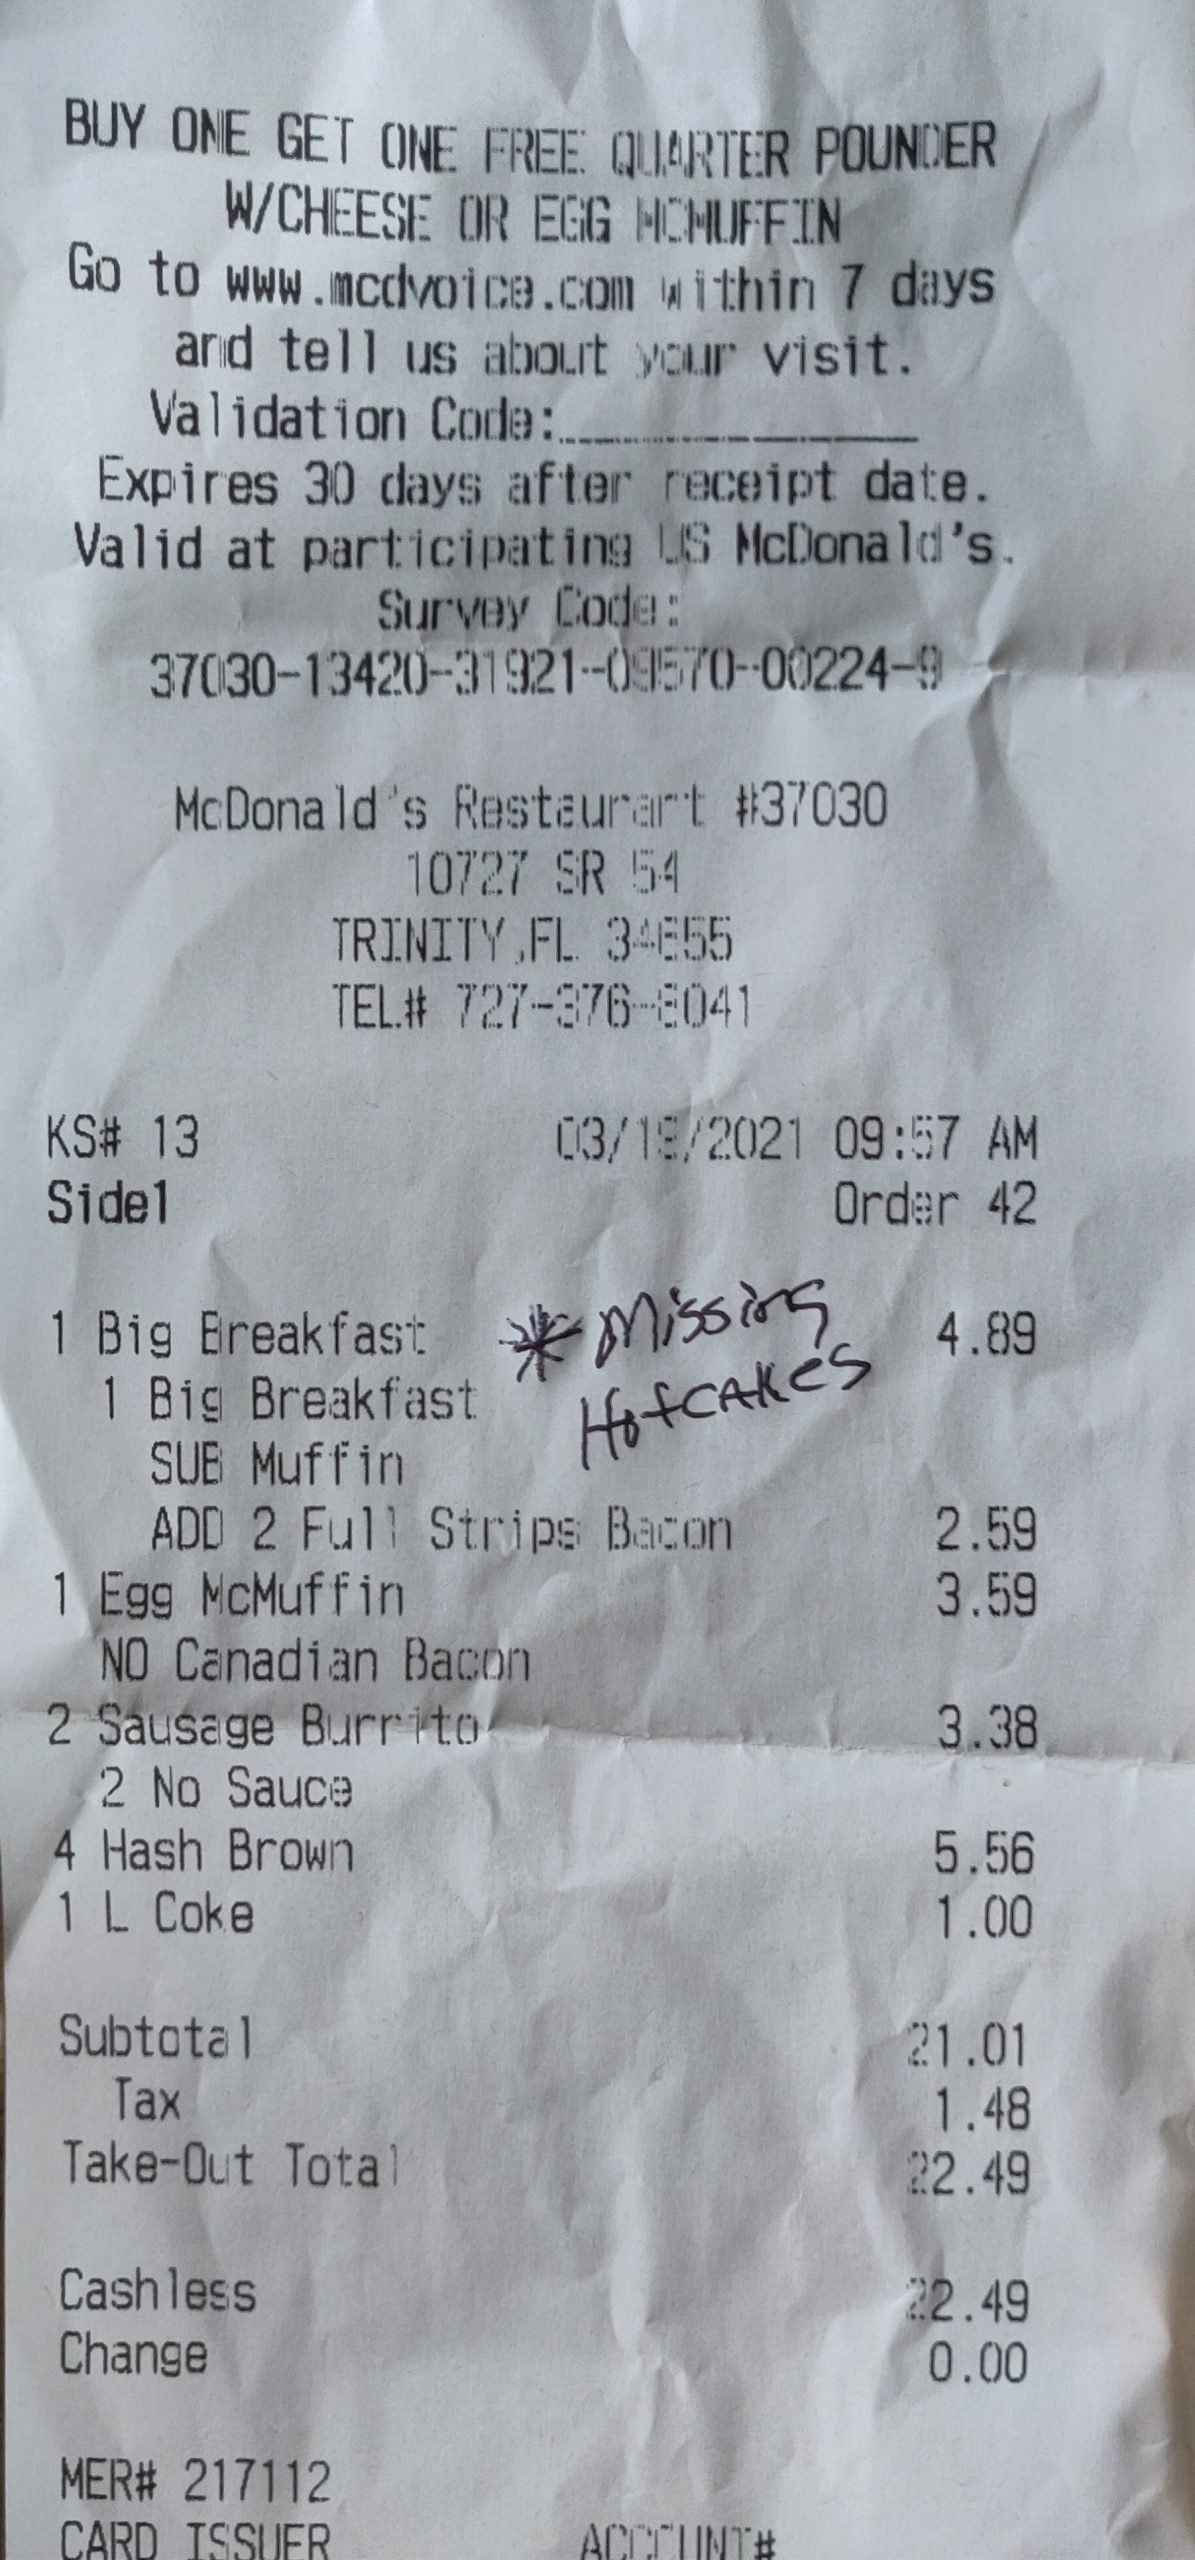 McDonalds complaint Incorrect Order Again!